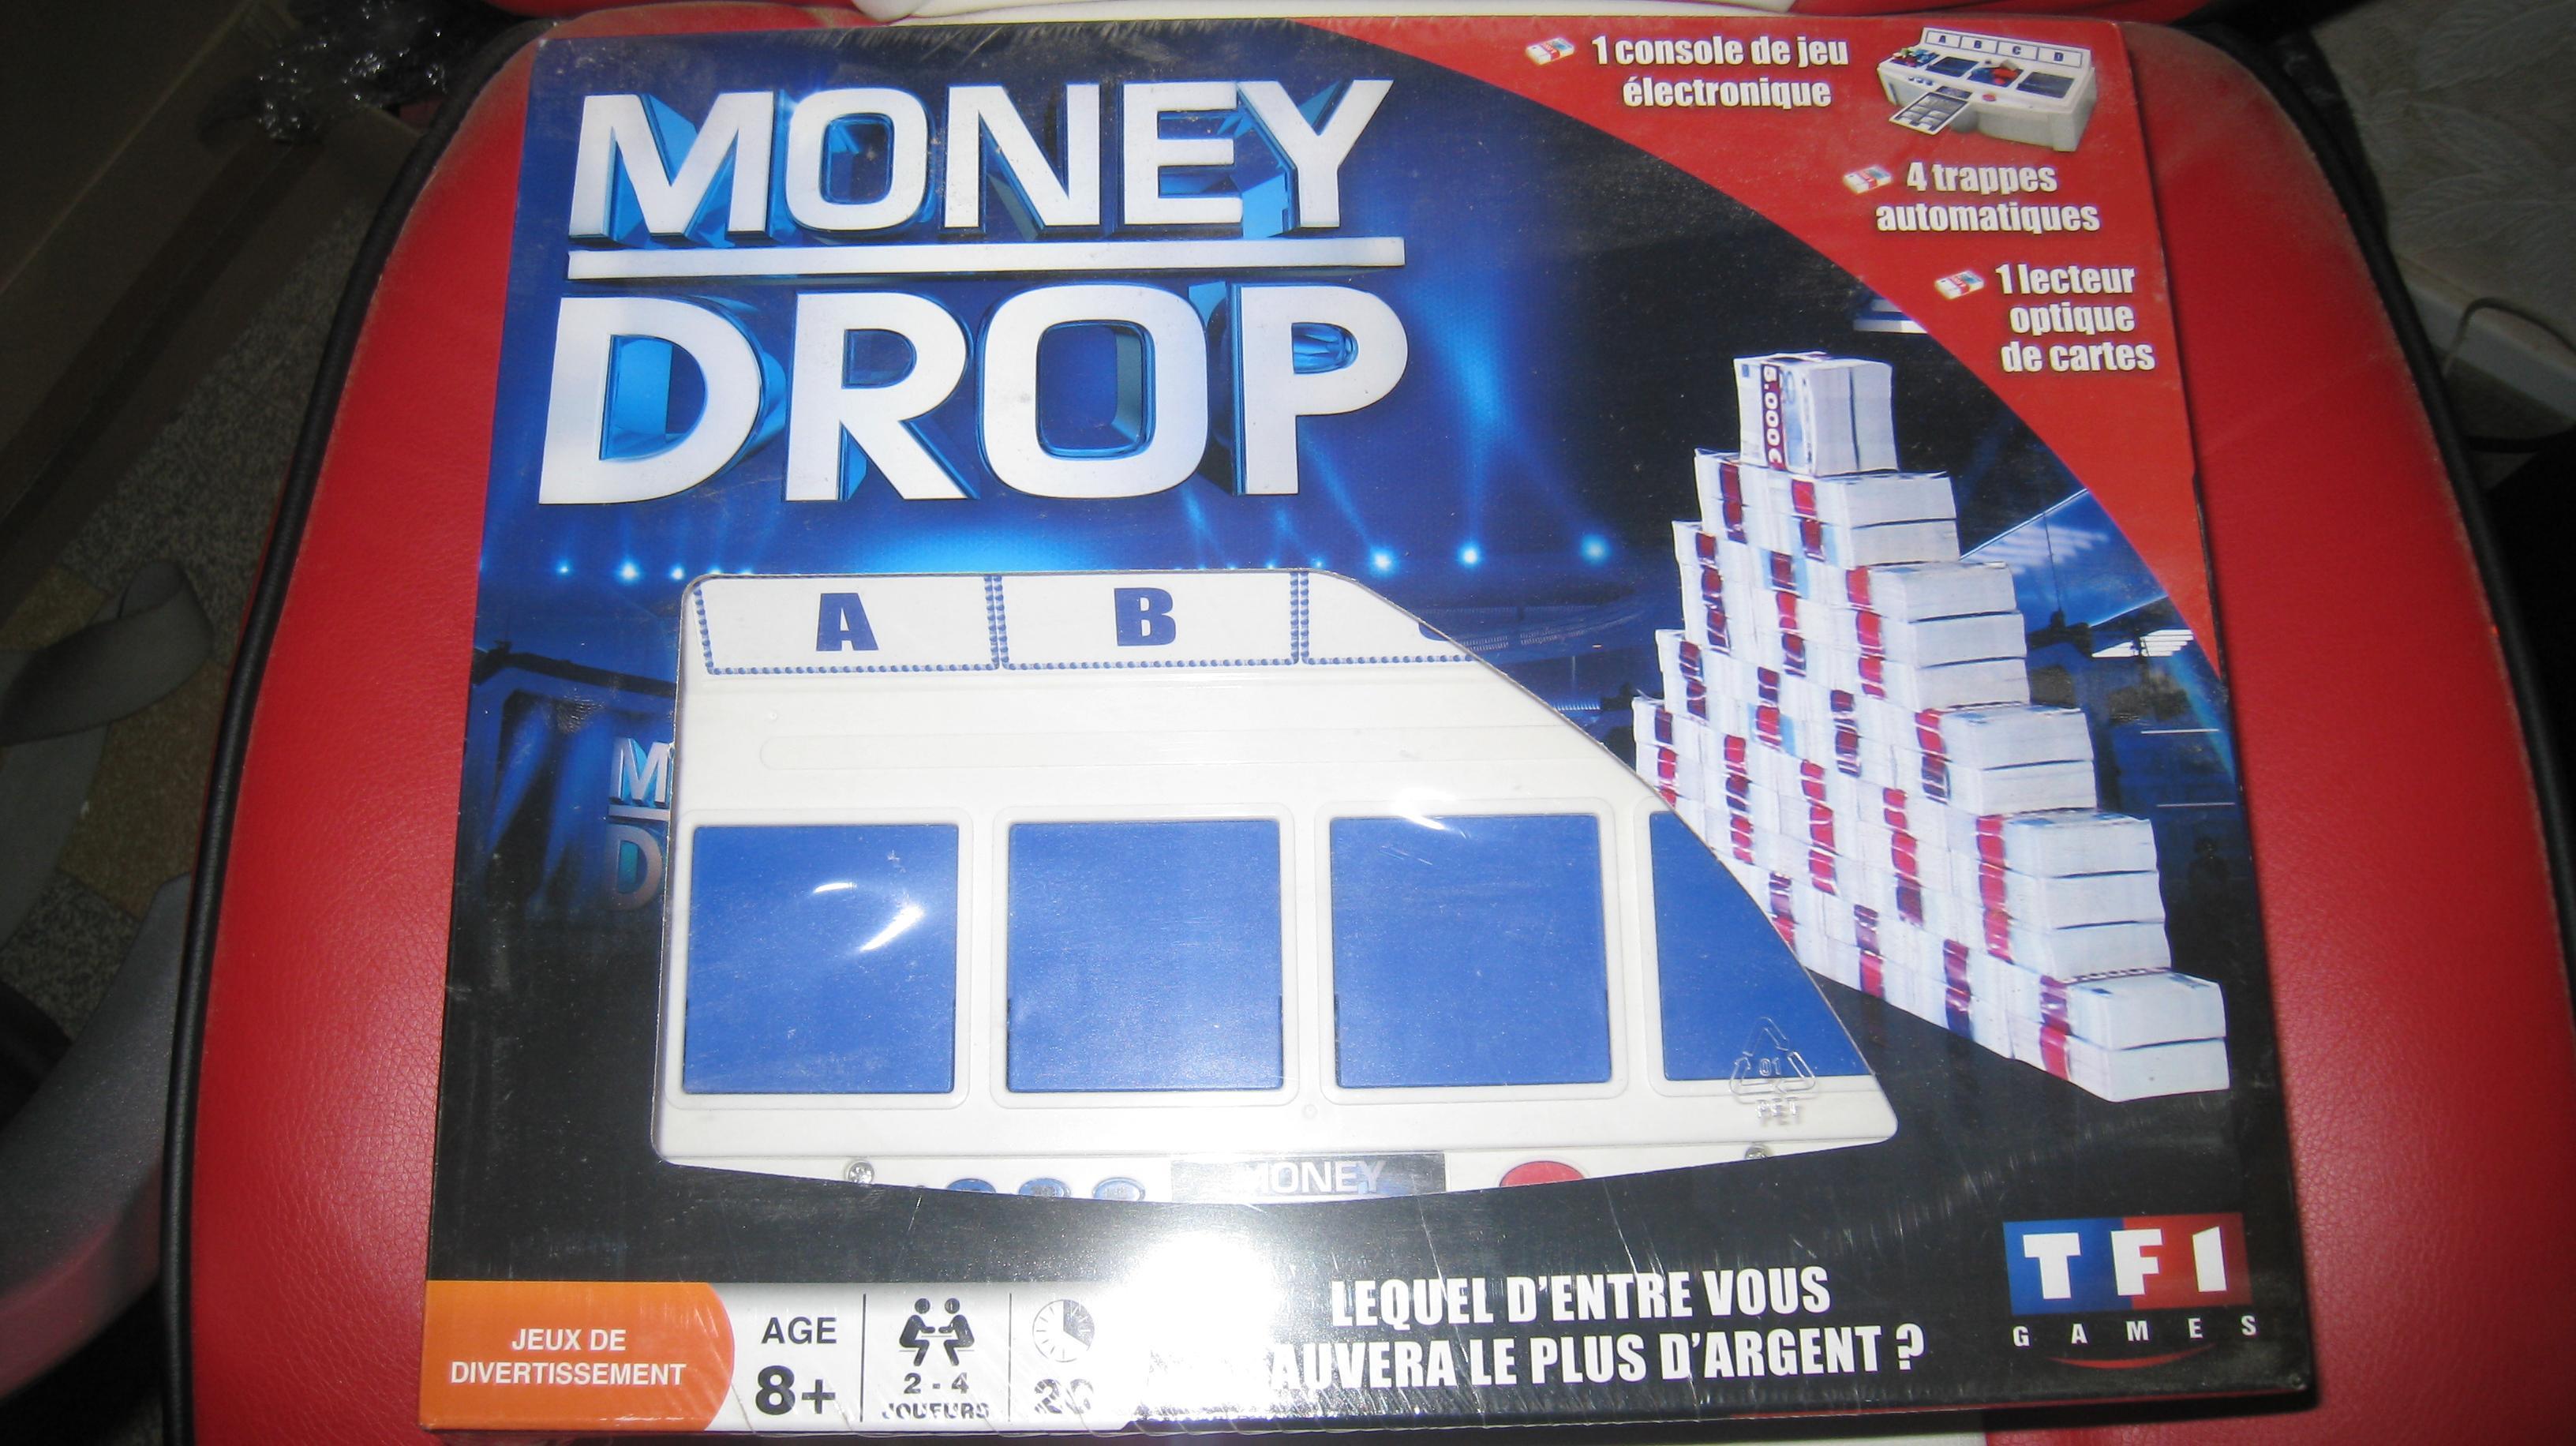 troc de troc money drop image 0